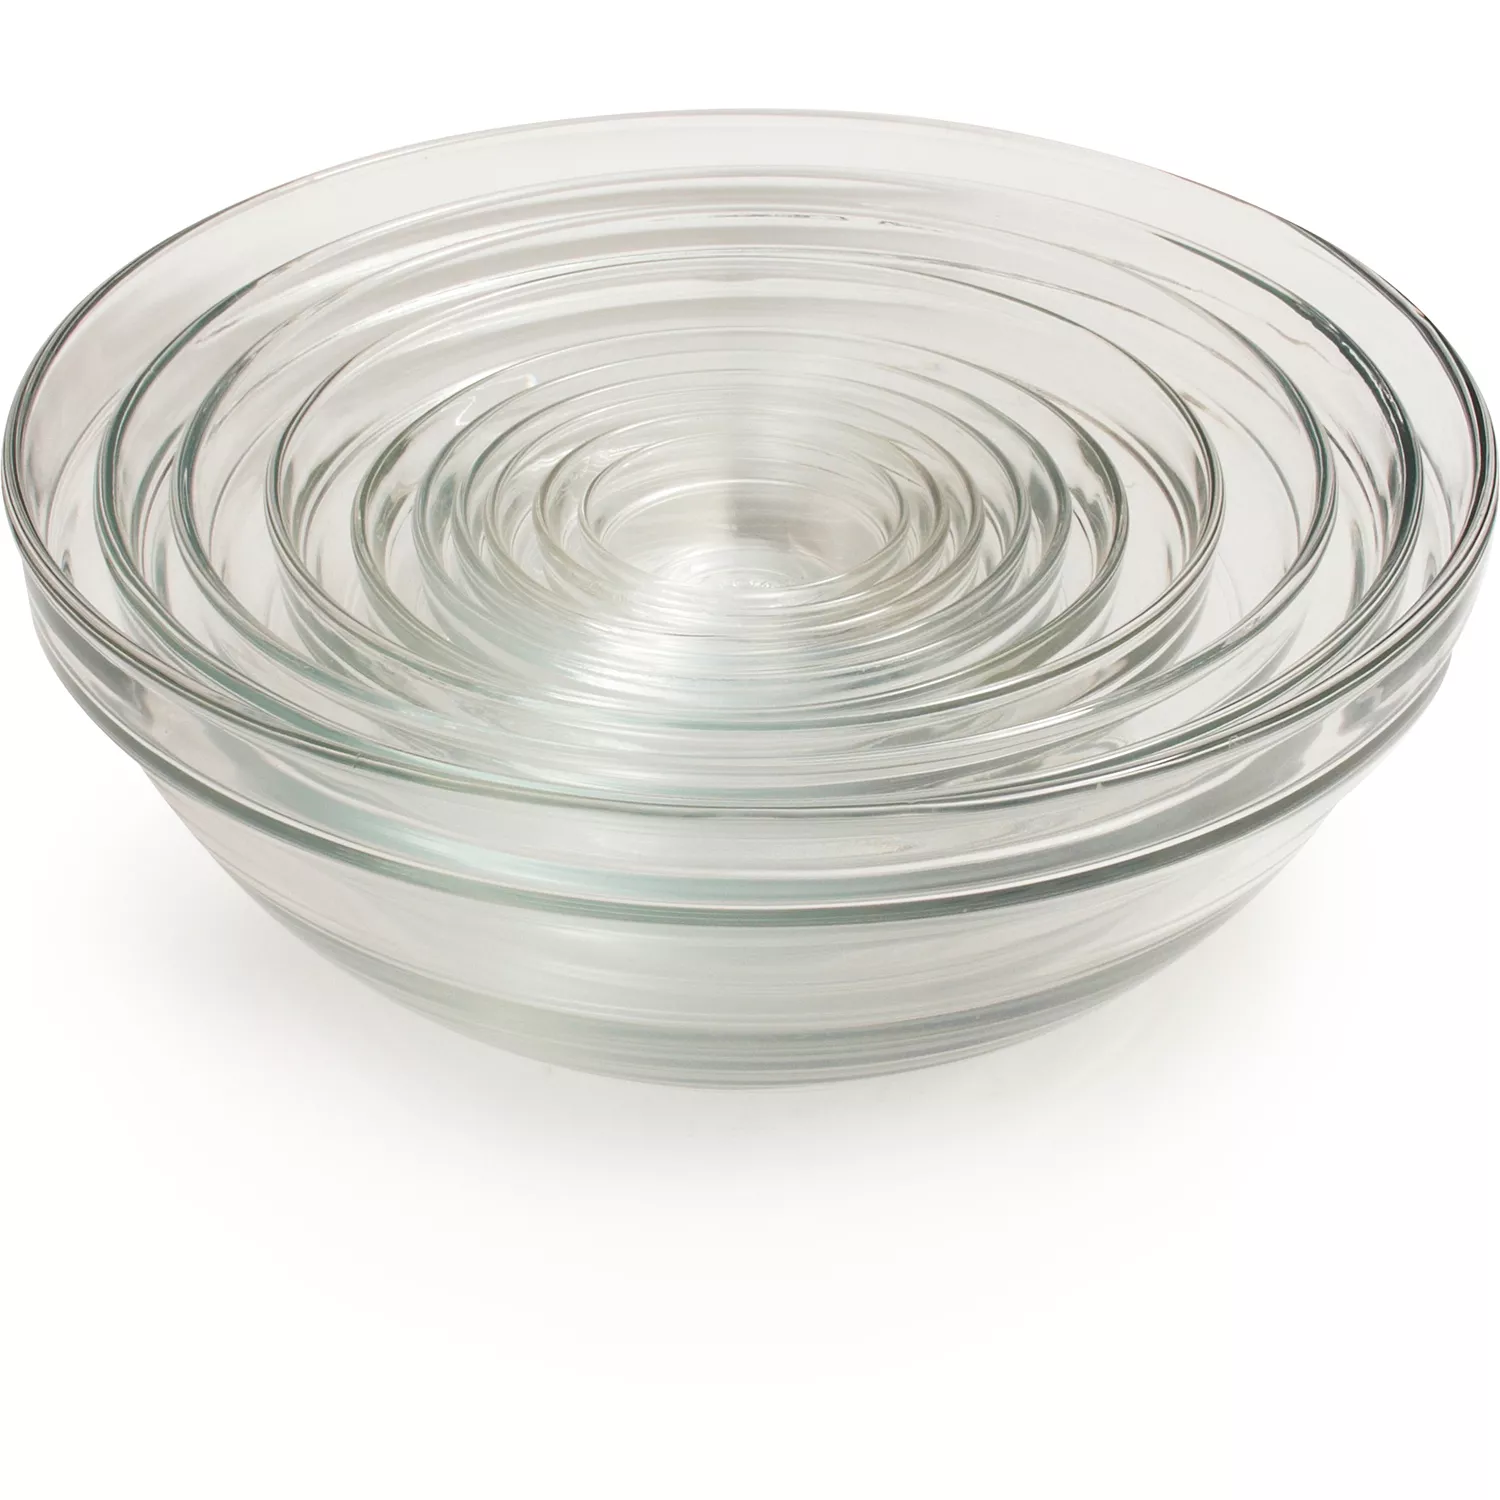 Duralex 1 oz Duralex Glass Prep Bowl - Whisk